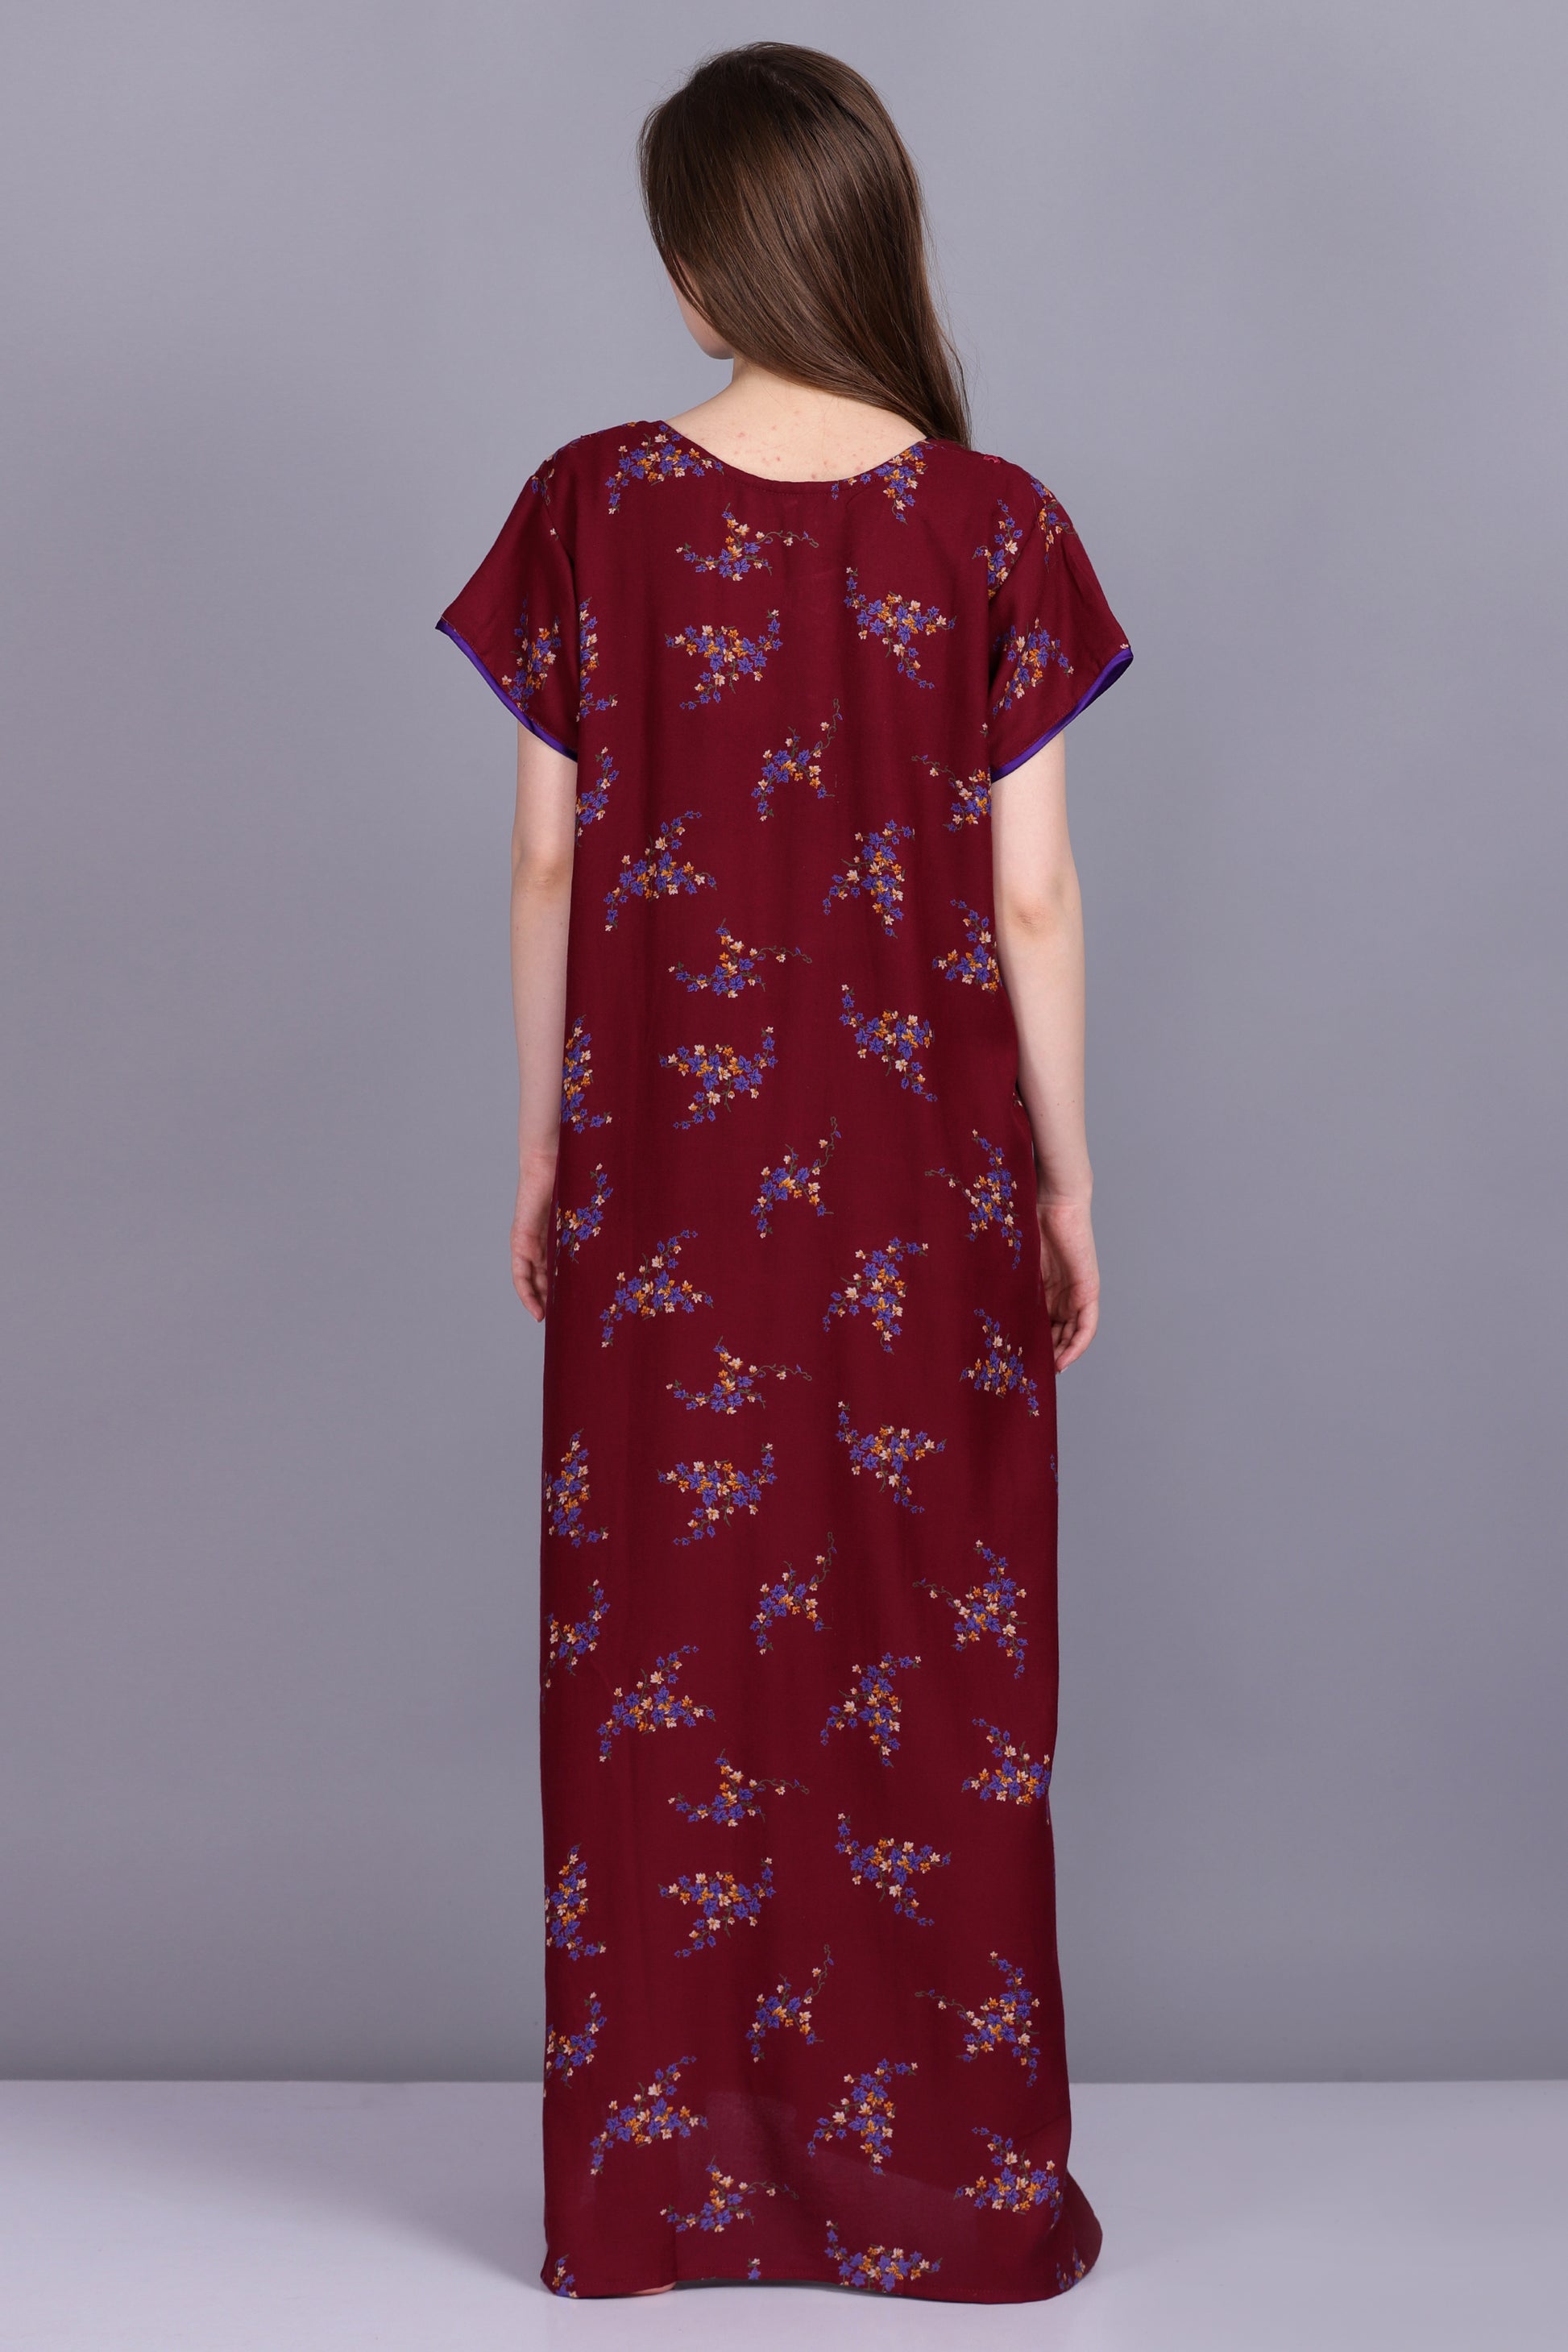 Floral Print & Short Sleeves Alpine Women Night Gown / Nighty